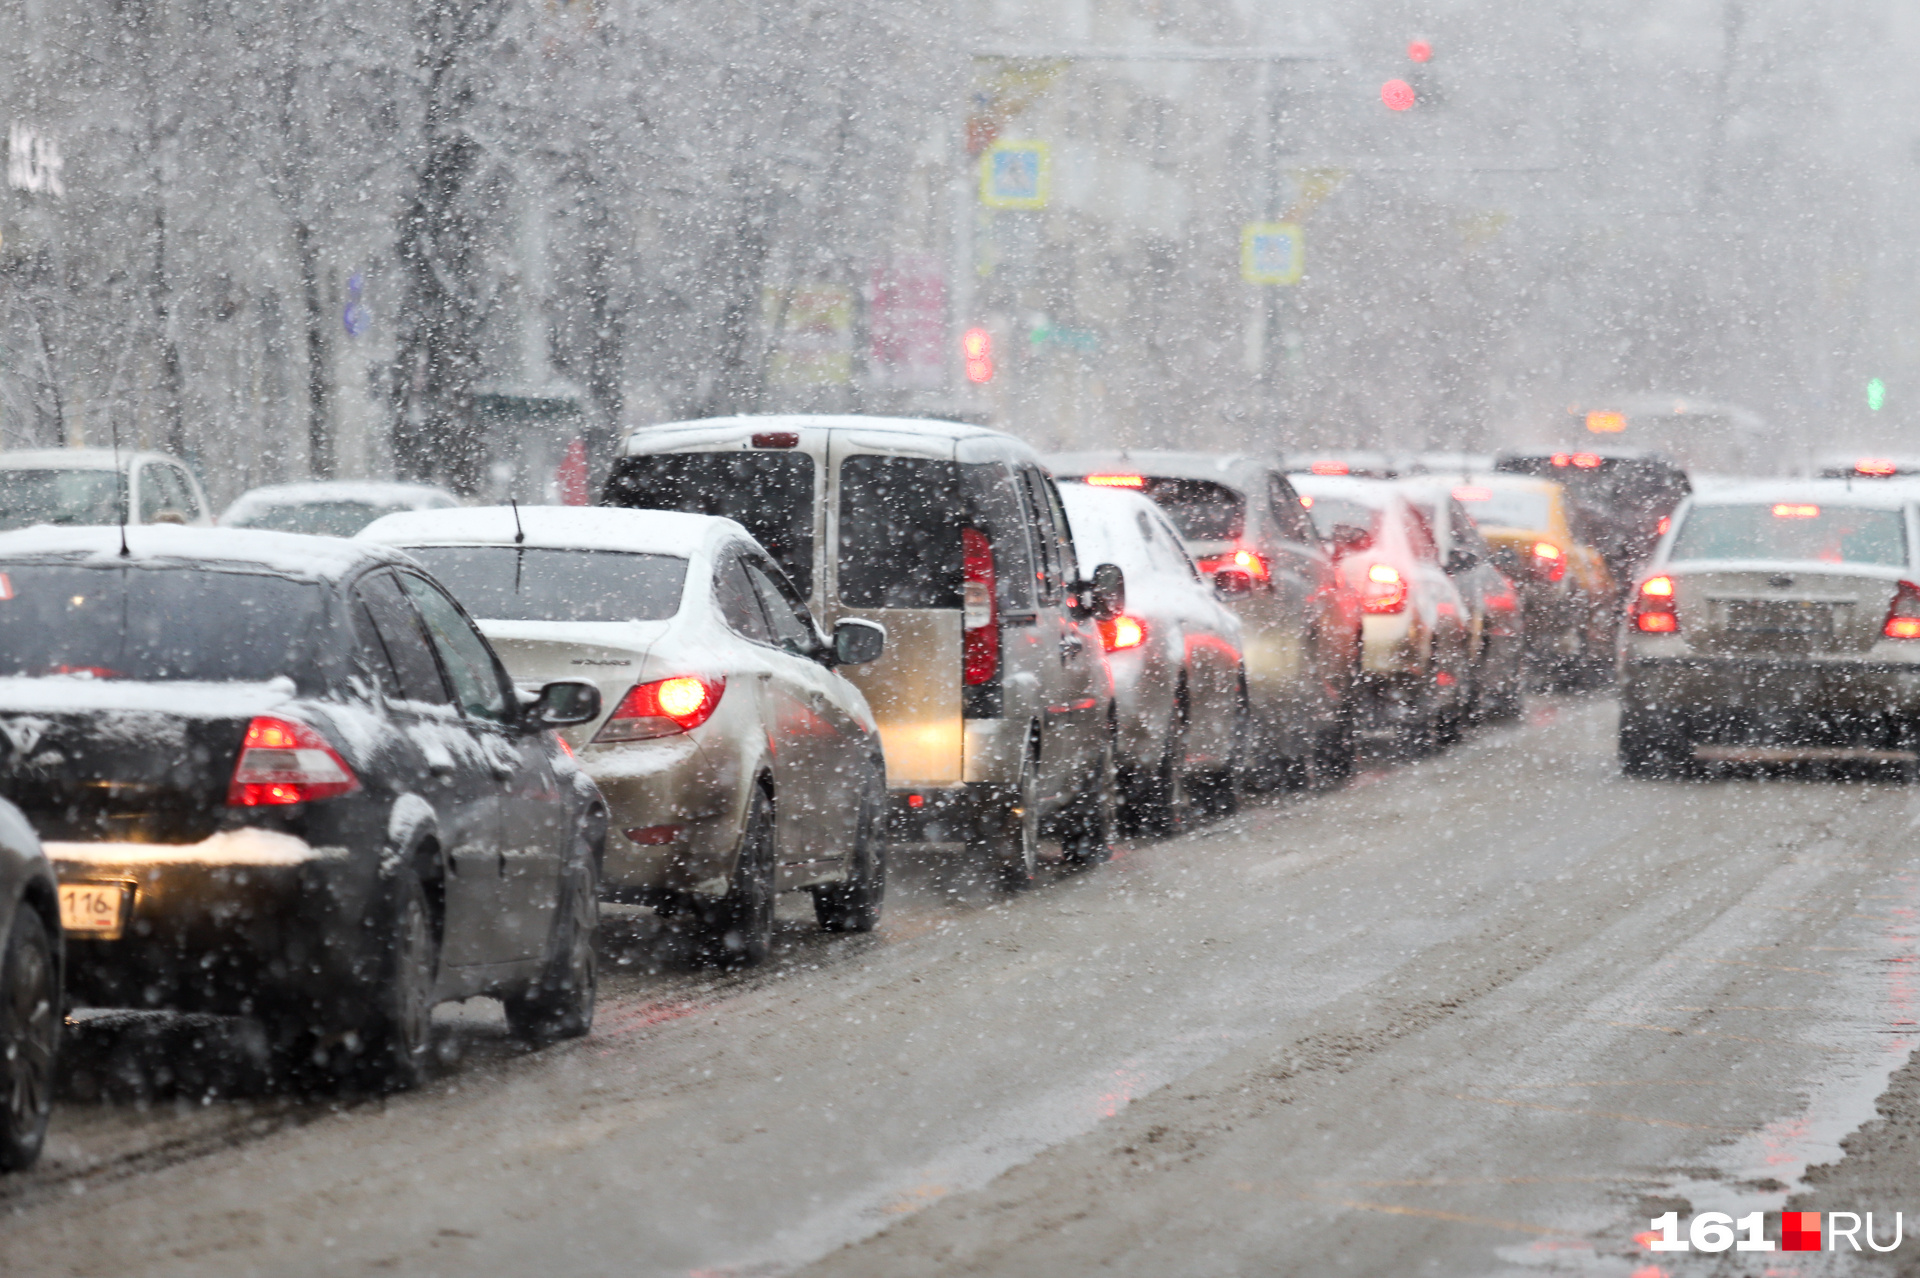 Из-за снегопада проезд на многих улицах затруднен